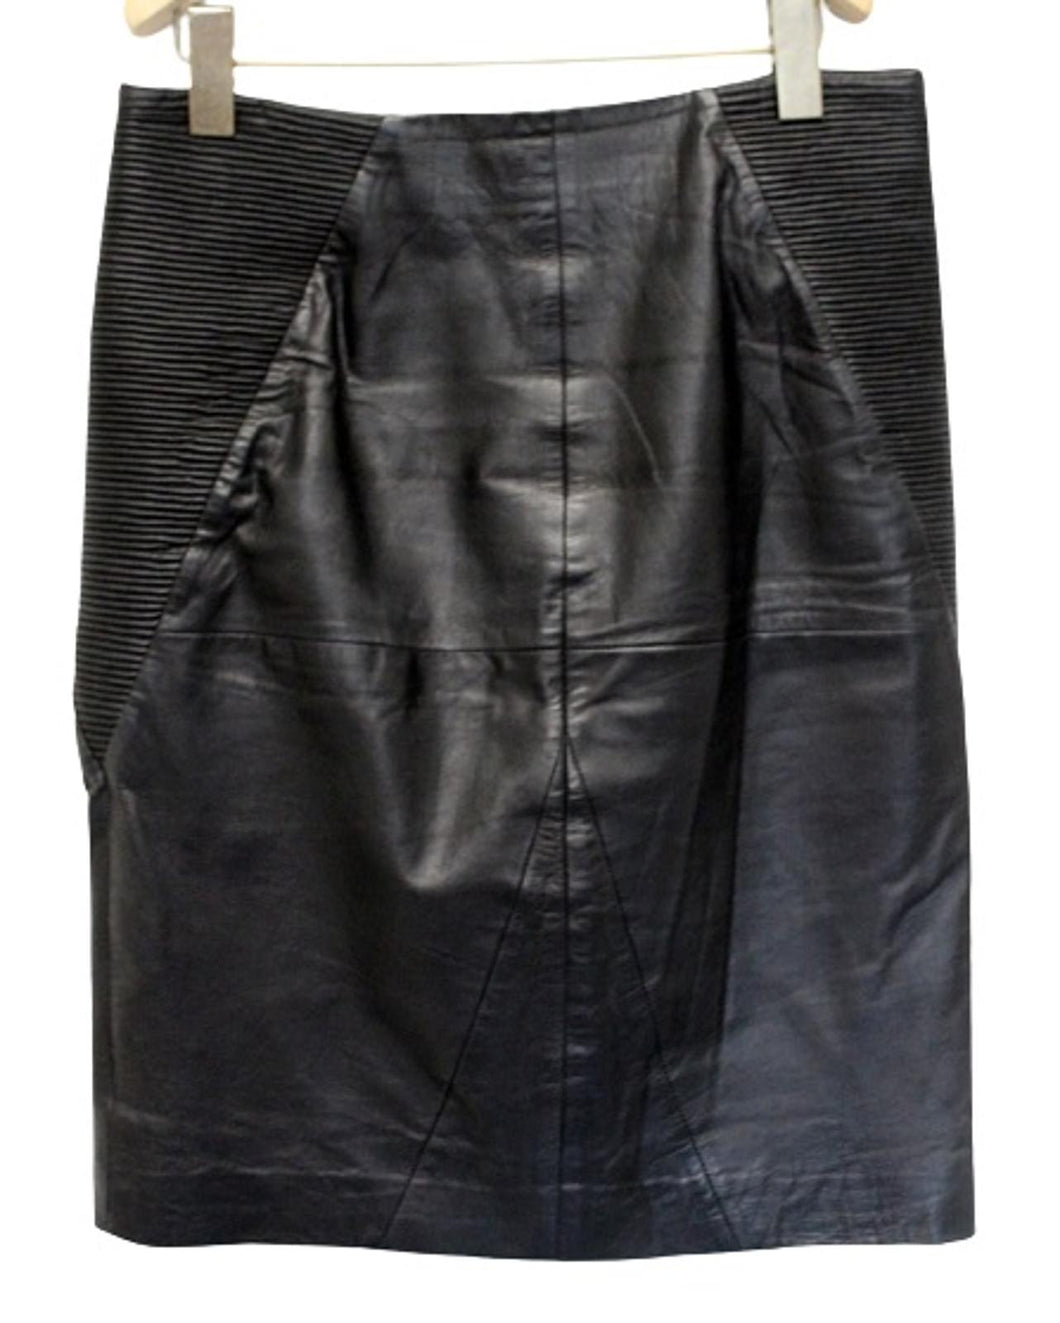 Y.A.S VERO MODA Ladies Splenda Black Real Leather Pencil Skirt EU38 UK10